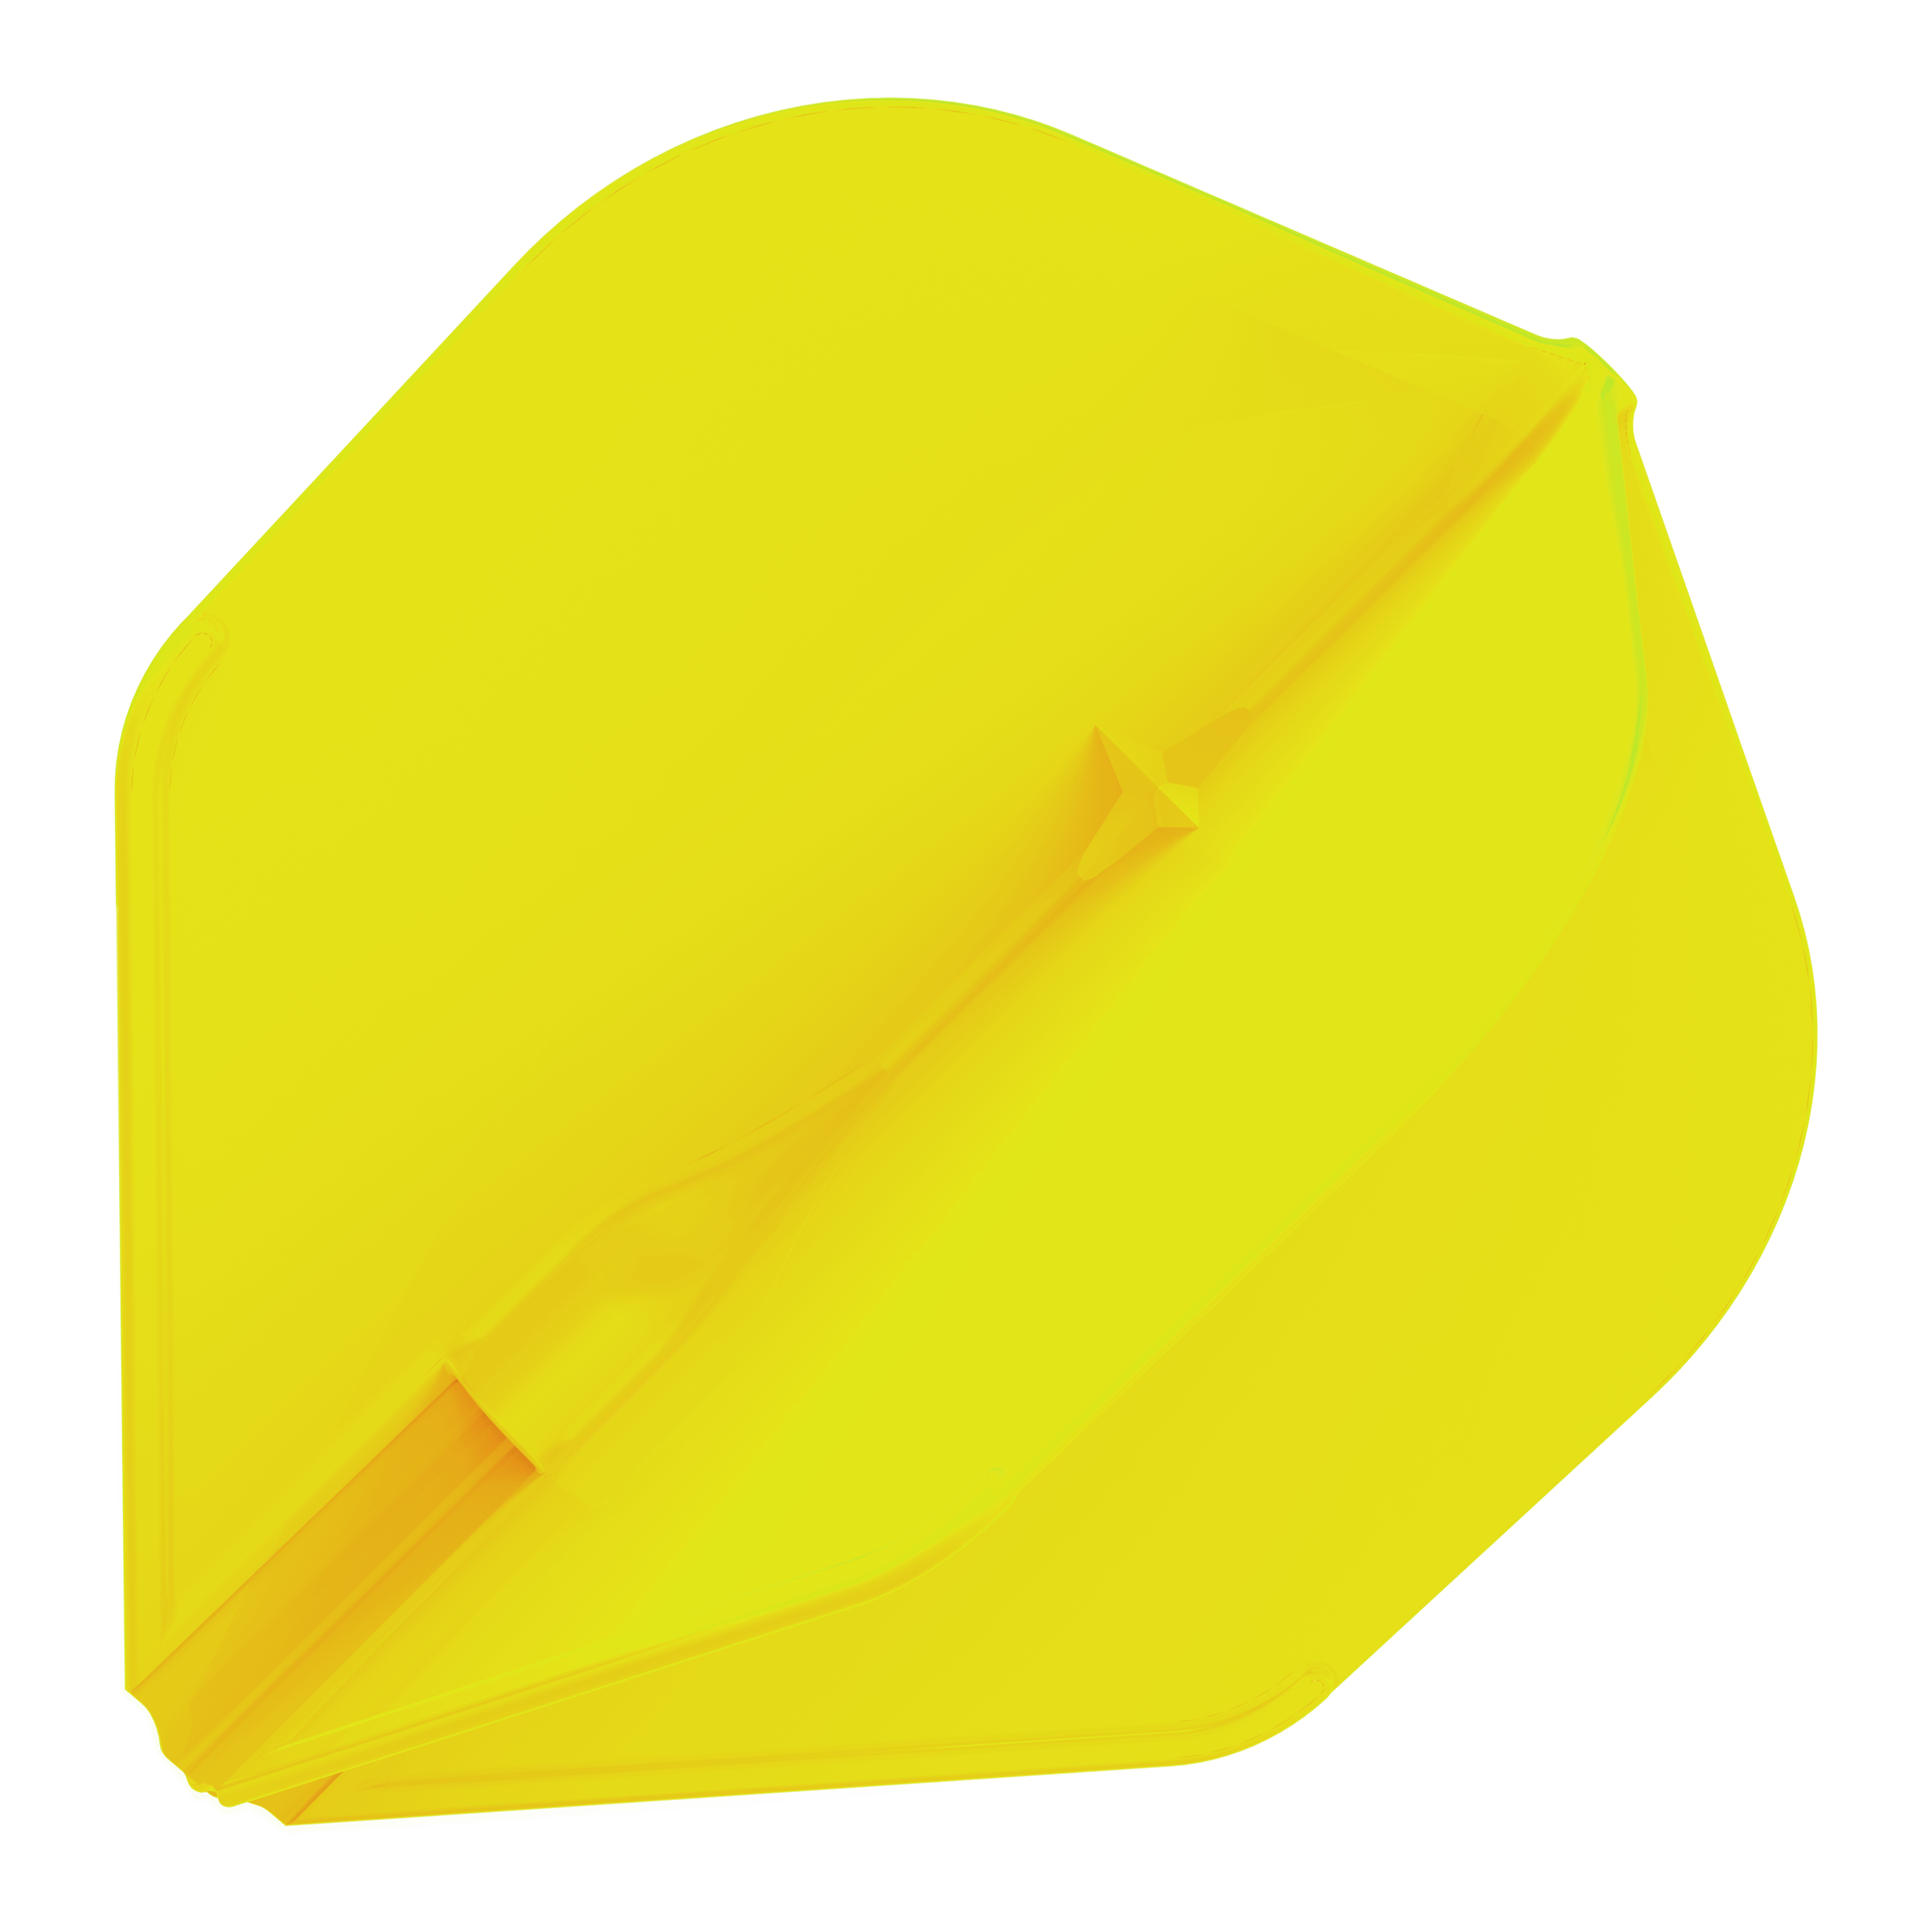 Gelb